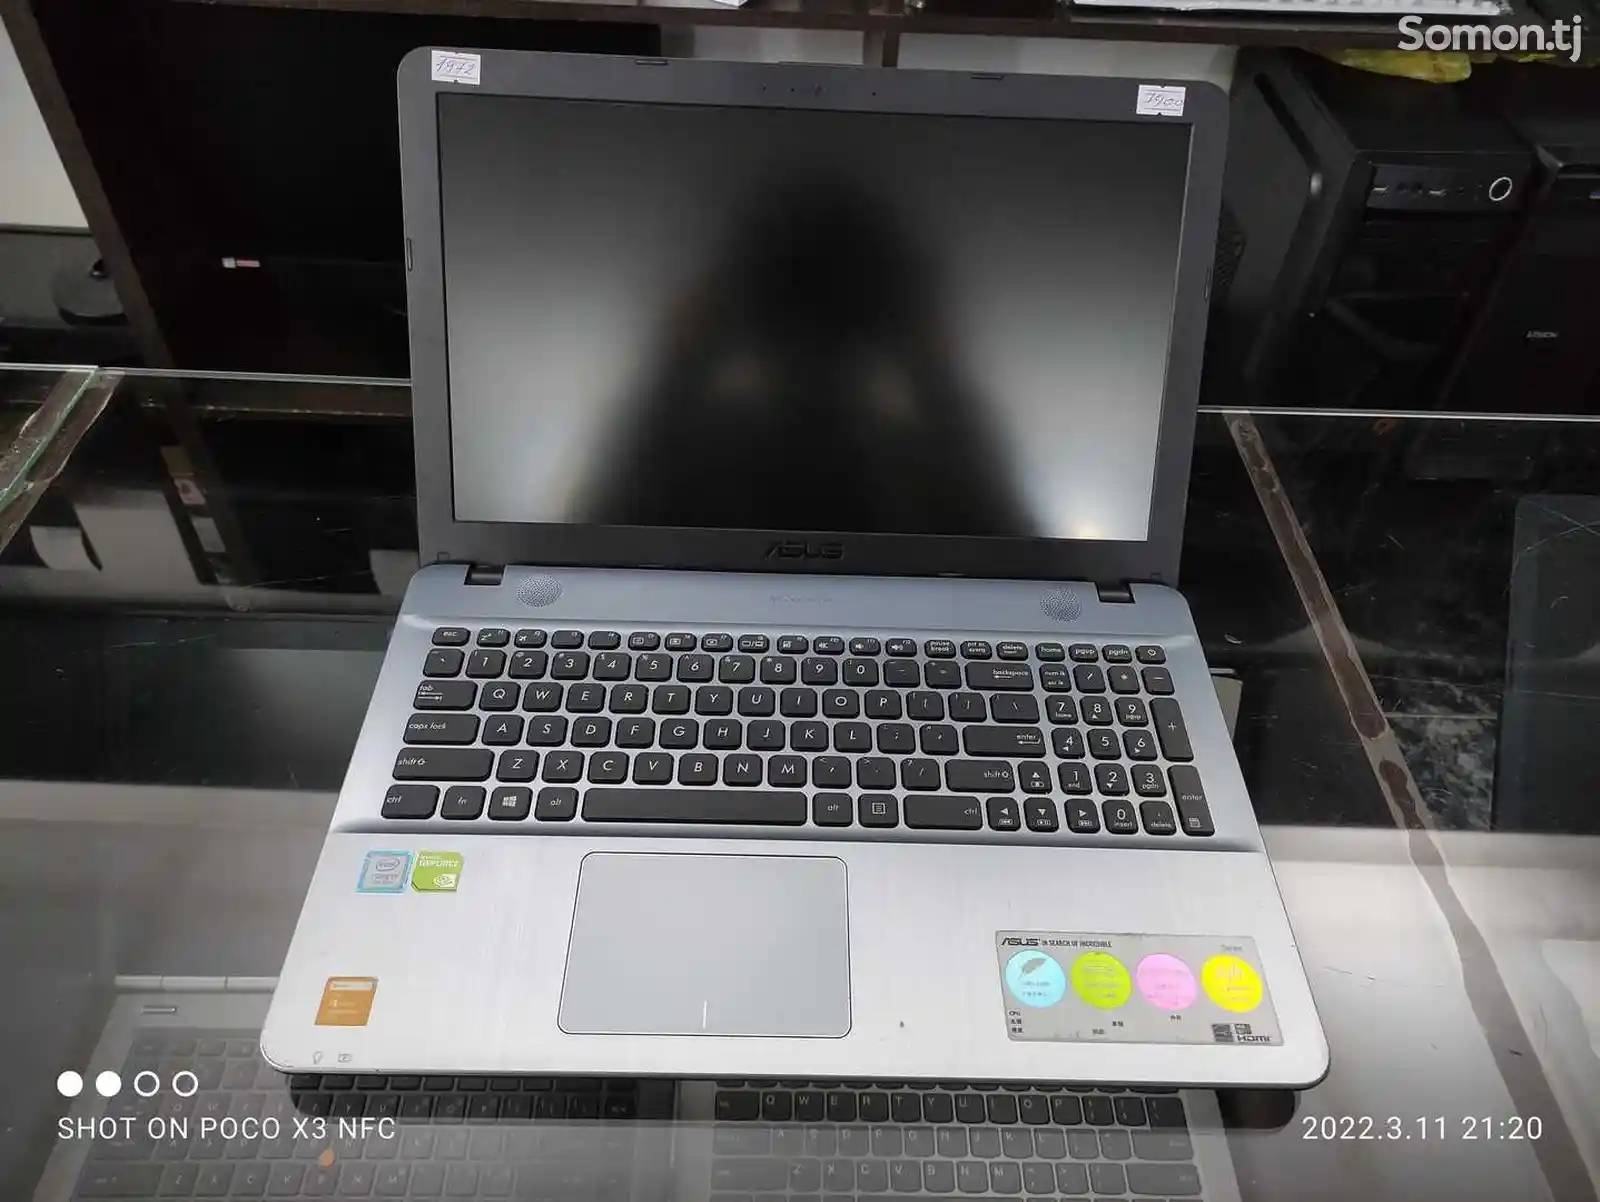 Игровой ноутбук Asus X541UJ Core i7-7500U 2.9GHz 8gb/256gb SSD 7TH GEN-3